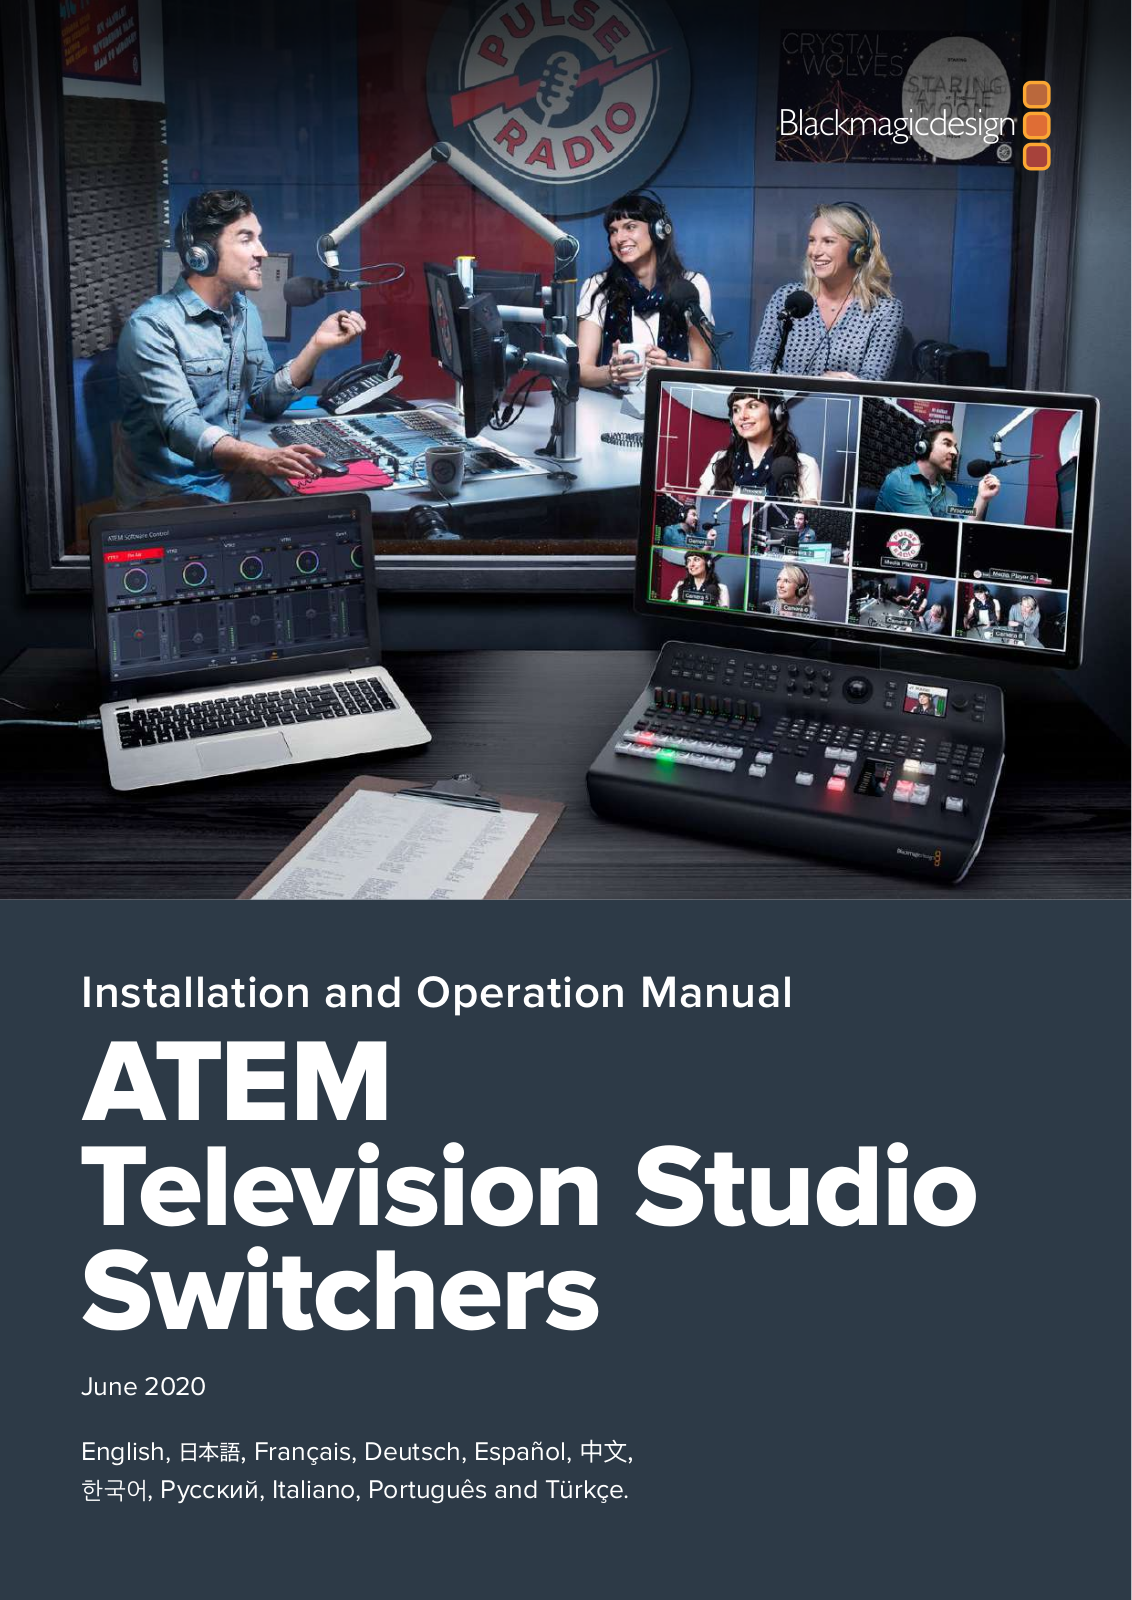 Blackmagic Design ATEM Television Studio Switchers Installation and Operation Manual